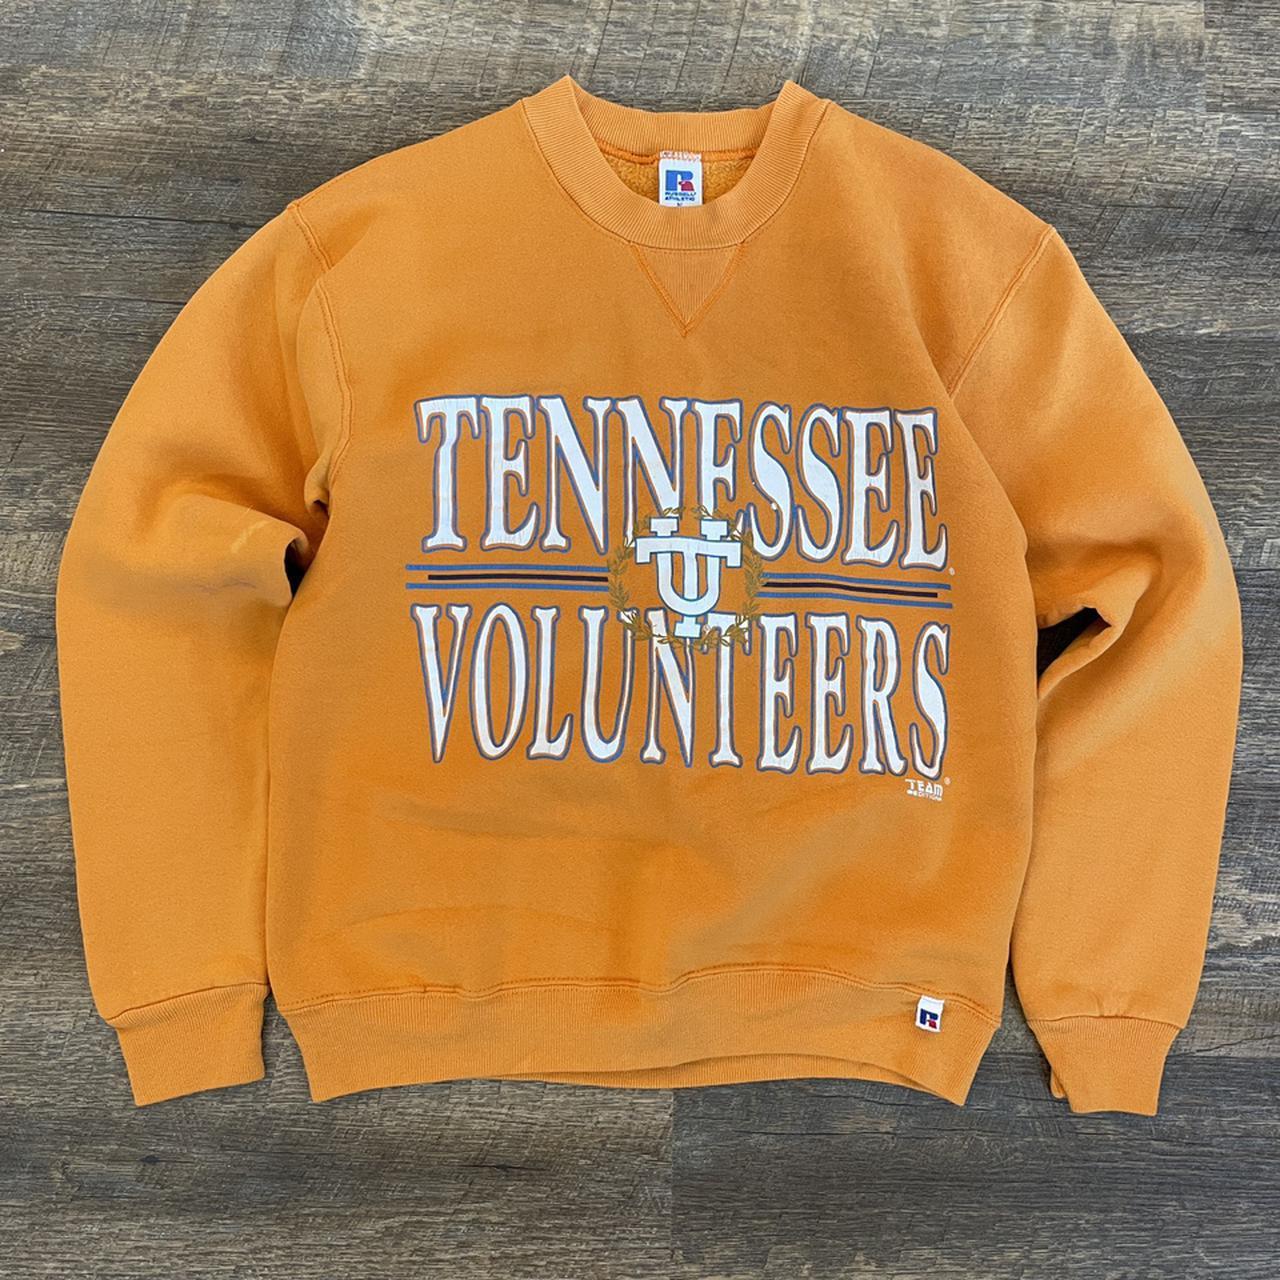 Product Image 1 - Vintage 1980’s Tennessee Volunteers Sweatshirt

Size